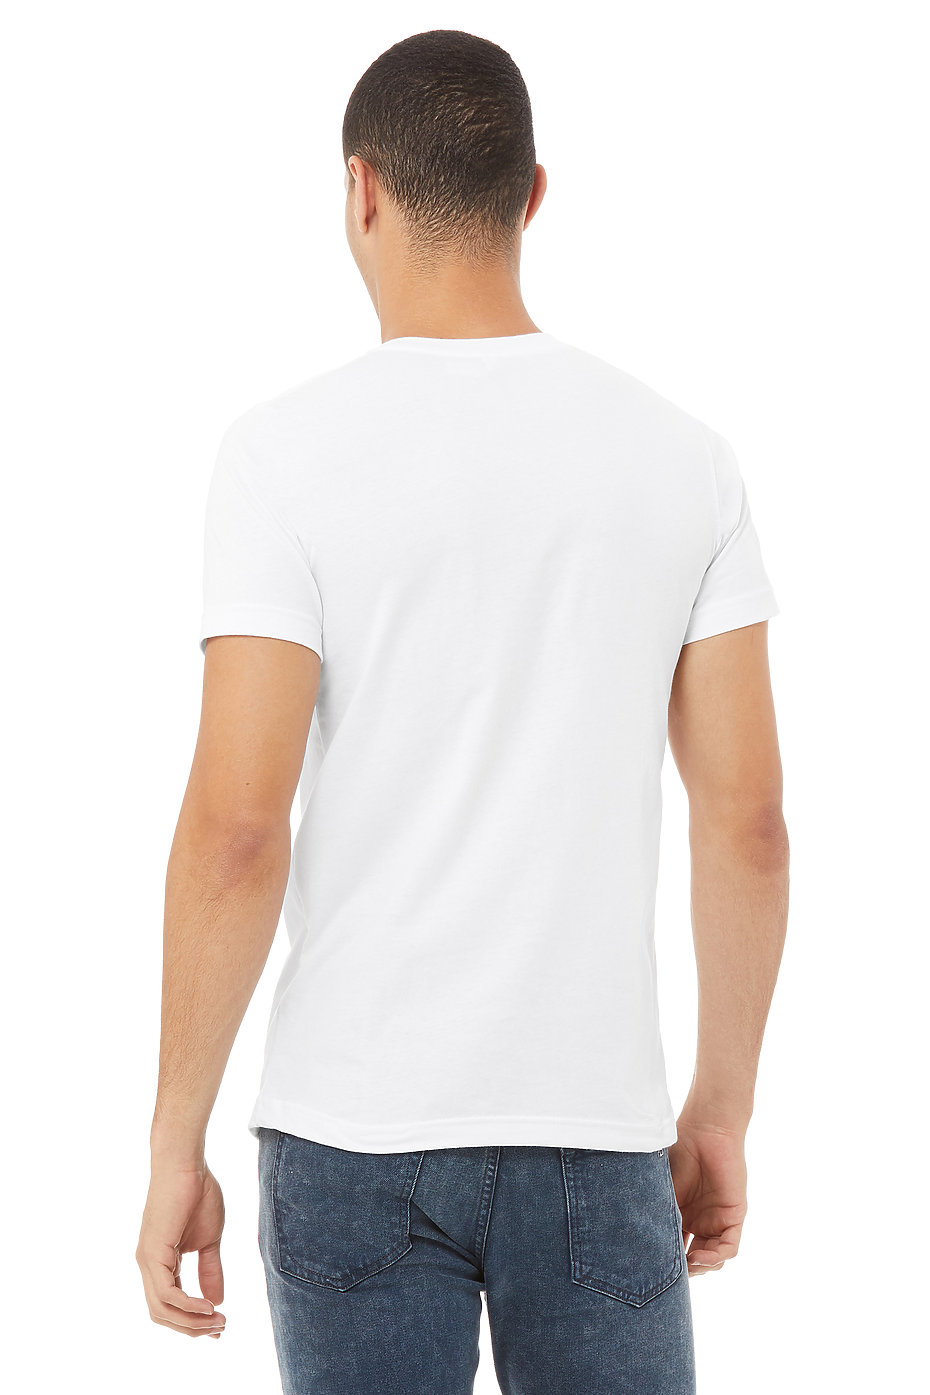 Bella Canvas 3005 Unisex Jersey Short-Sleeve V-Neck T-Shirt 